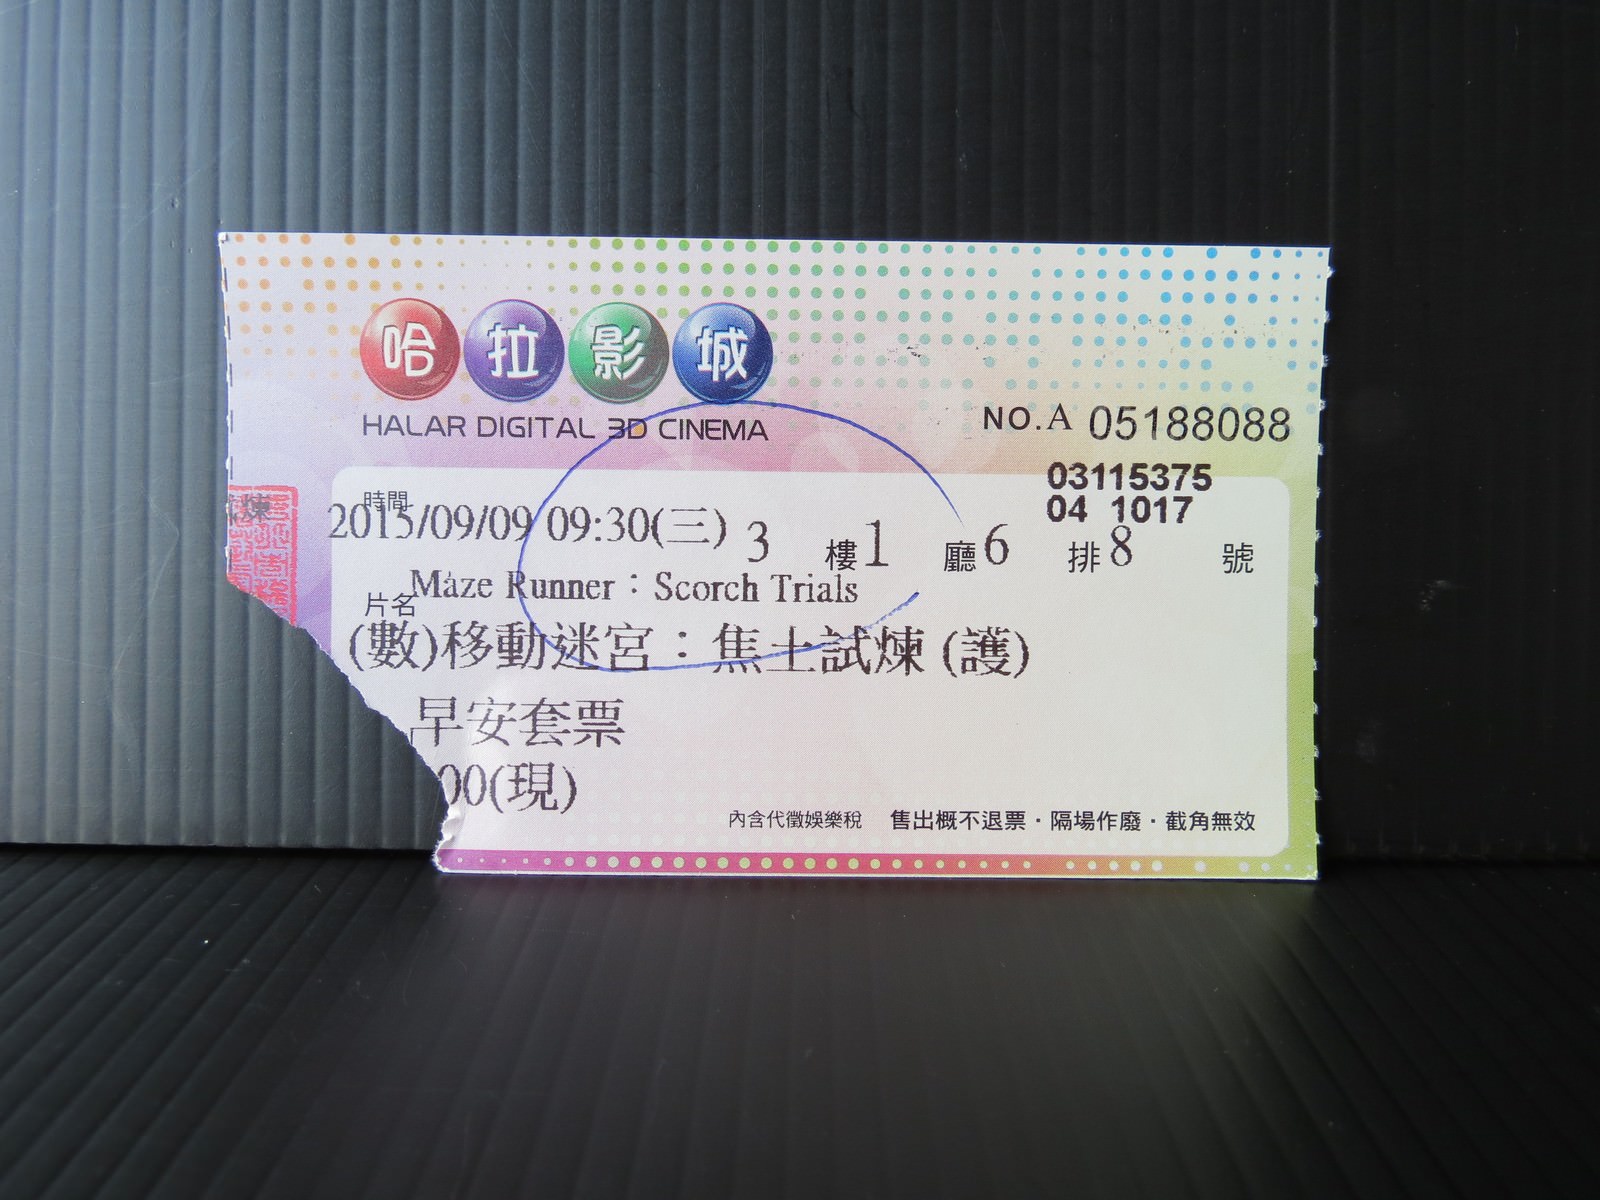 Movie, Maze Runner: The Scorch Trials(美國, 2015) / 移動迷宮：焦土試煉(台灣.香港) / 移动迷宫2(中國), 電影票